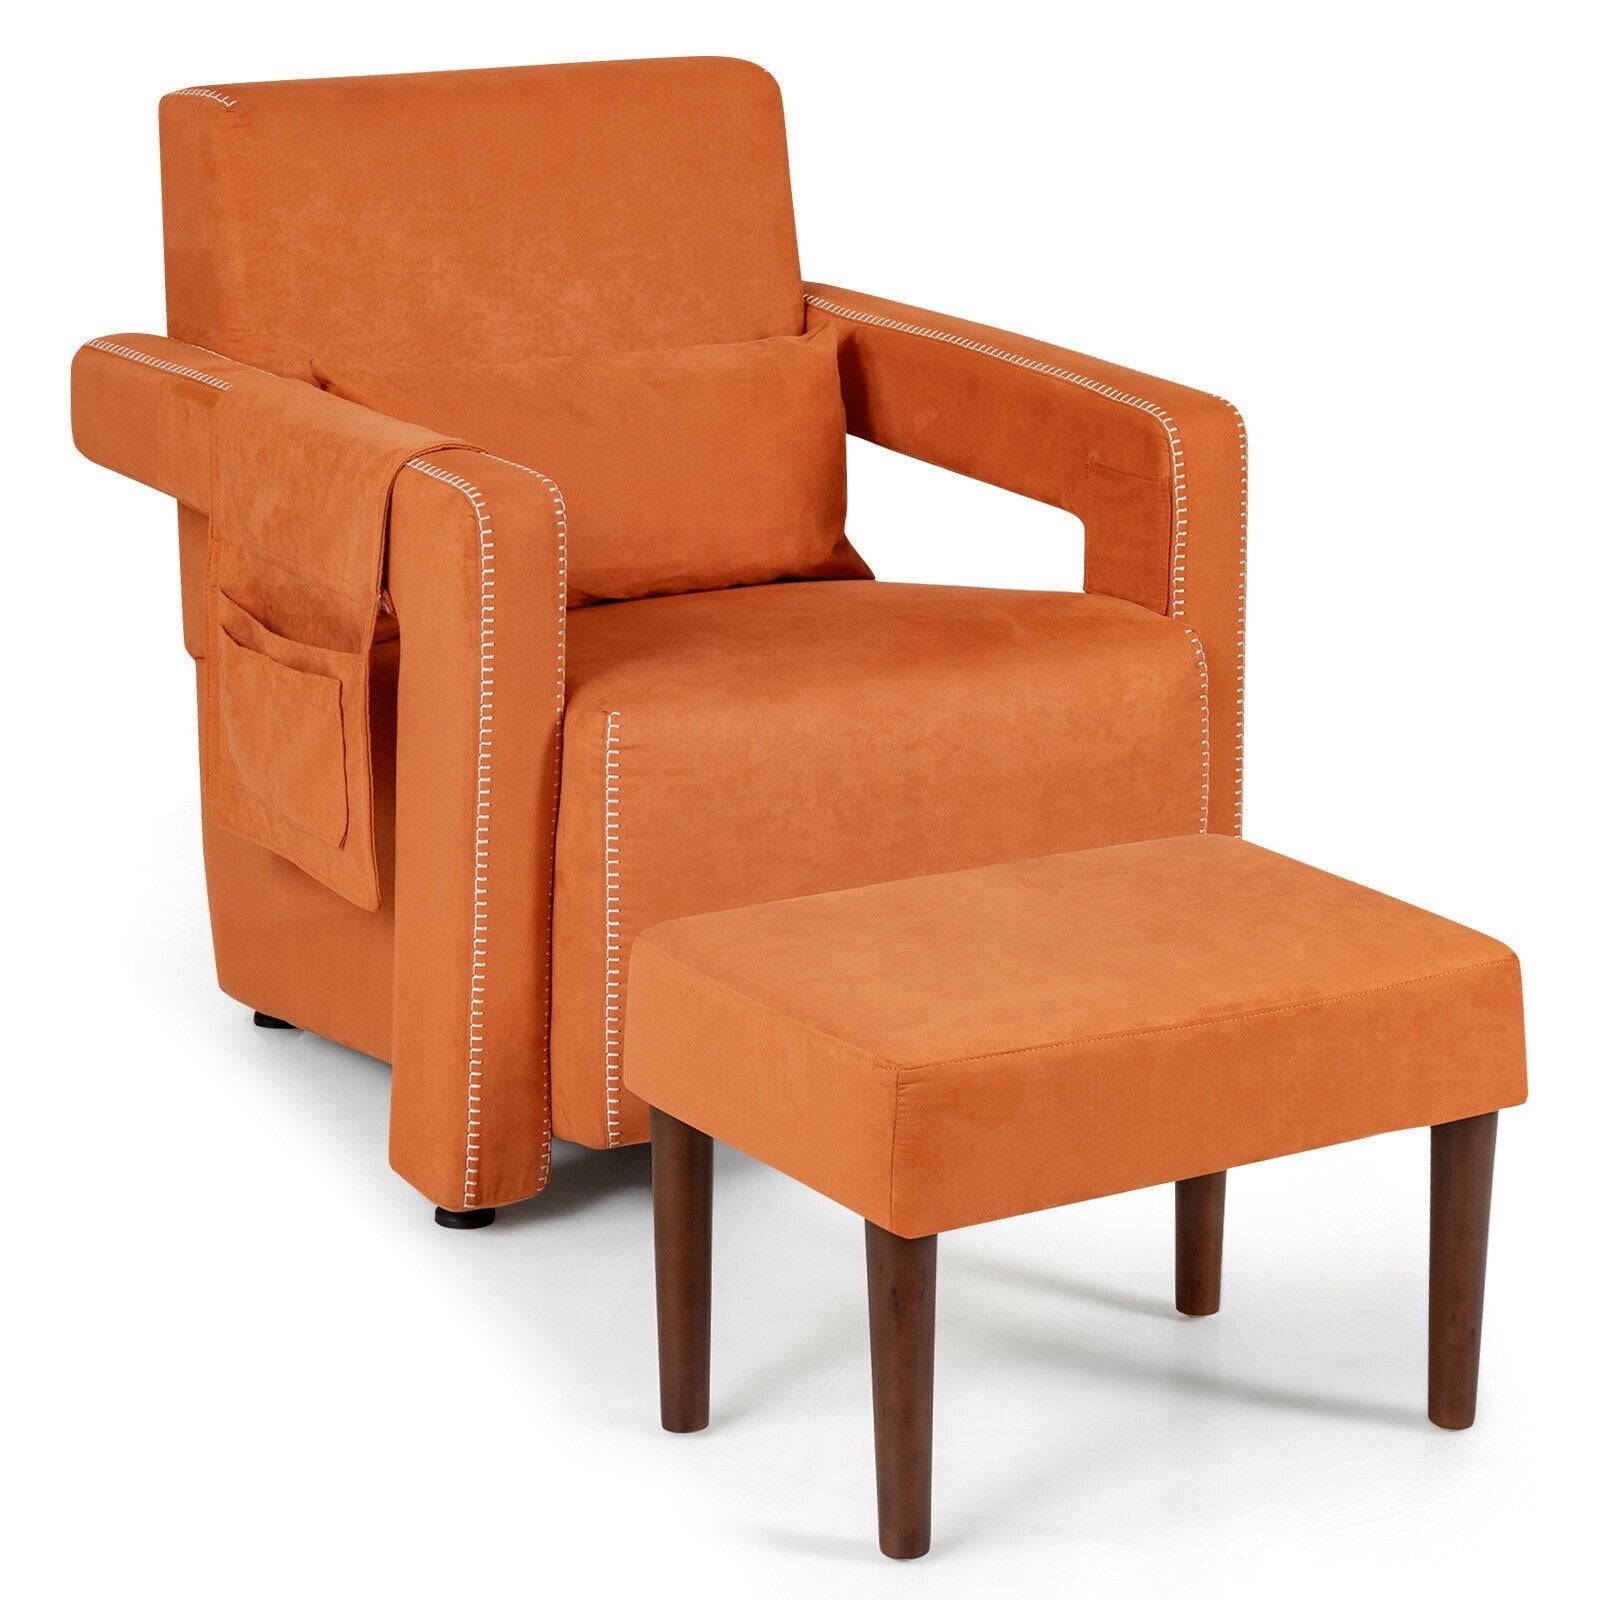 Modern Berber Fleece Single Sofa Chair with Ottoman and Waist Pillow, Orange - Gallery Canada